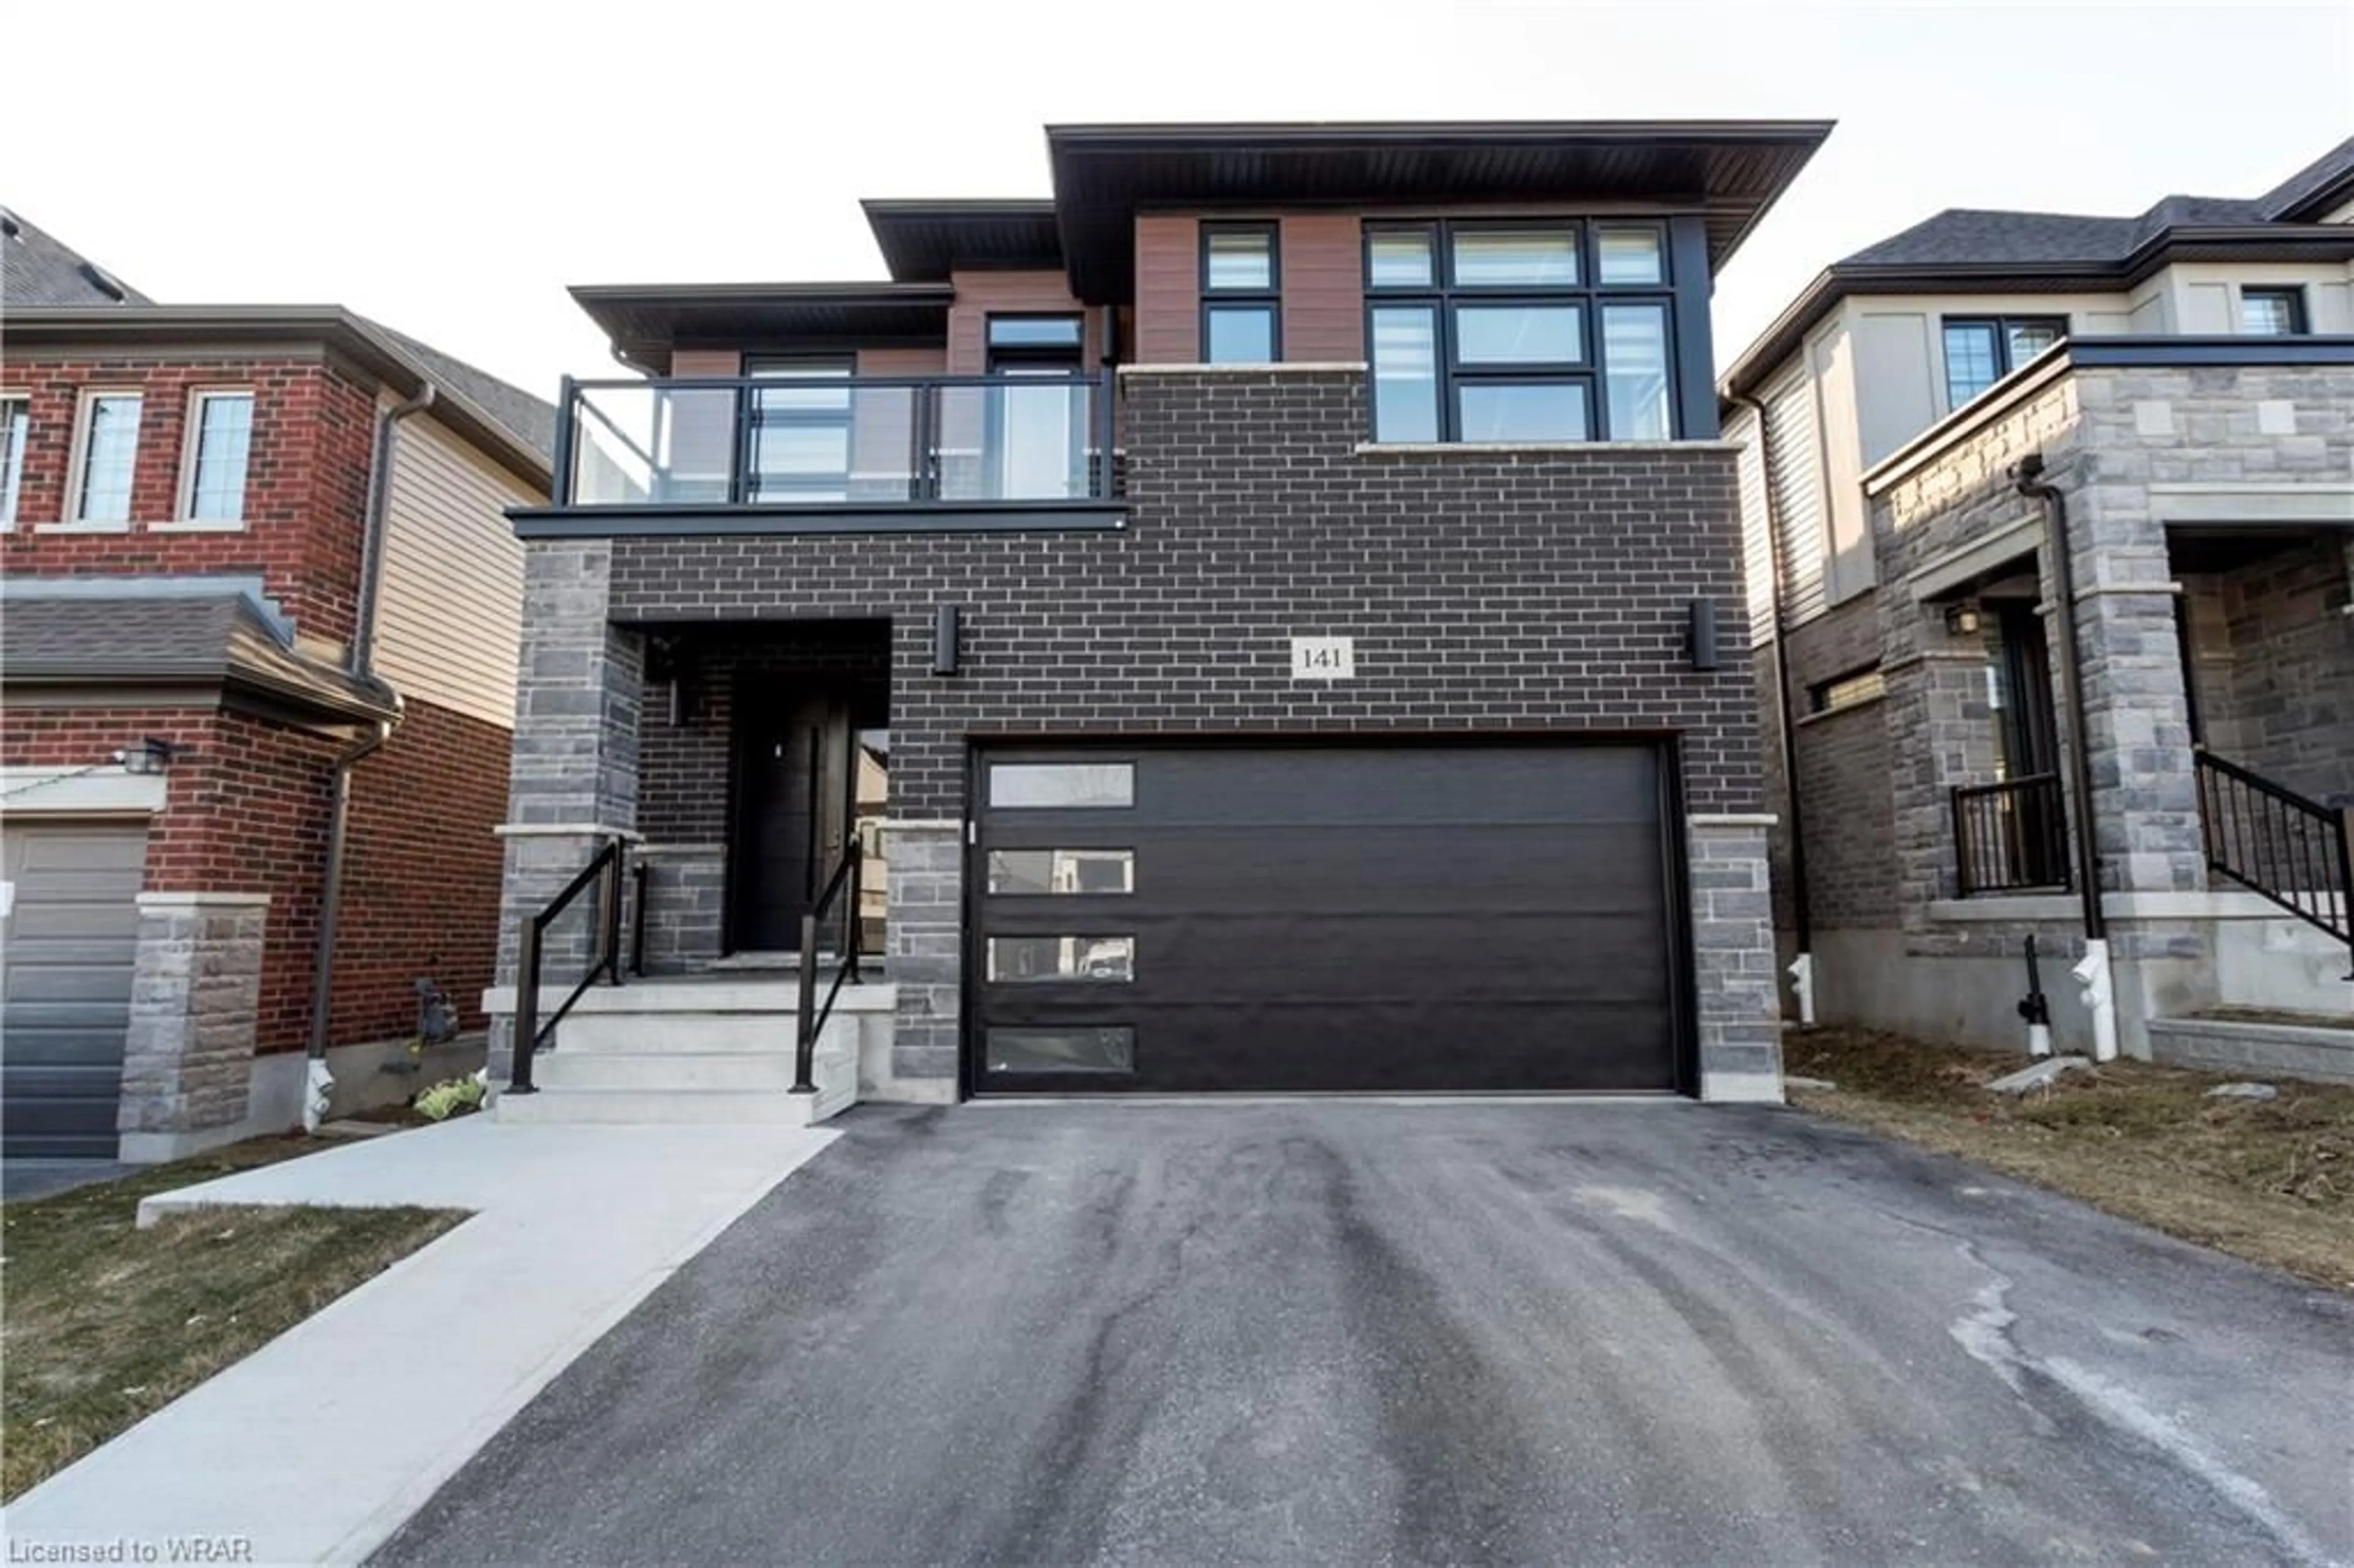 Home with brick exterior material for 141 Ridgemount Street, Kitchener Ontario N2P 2K3